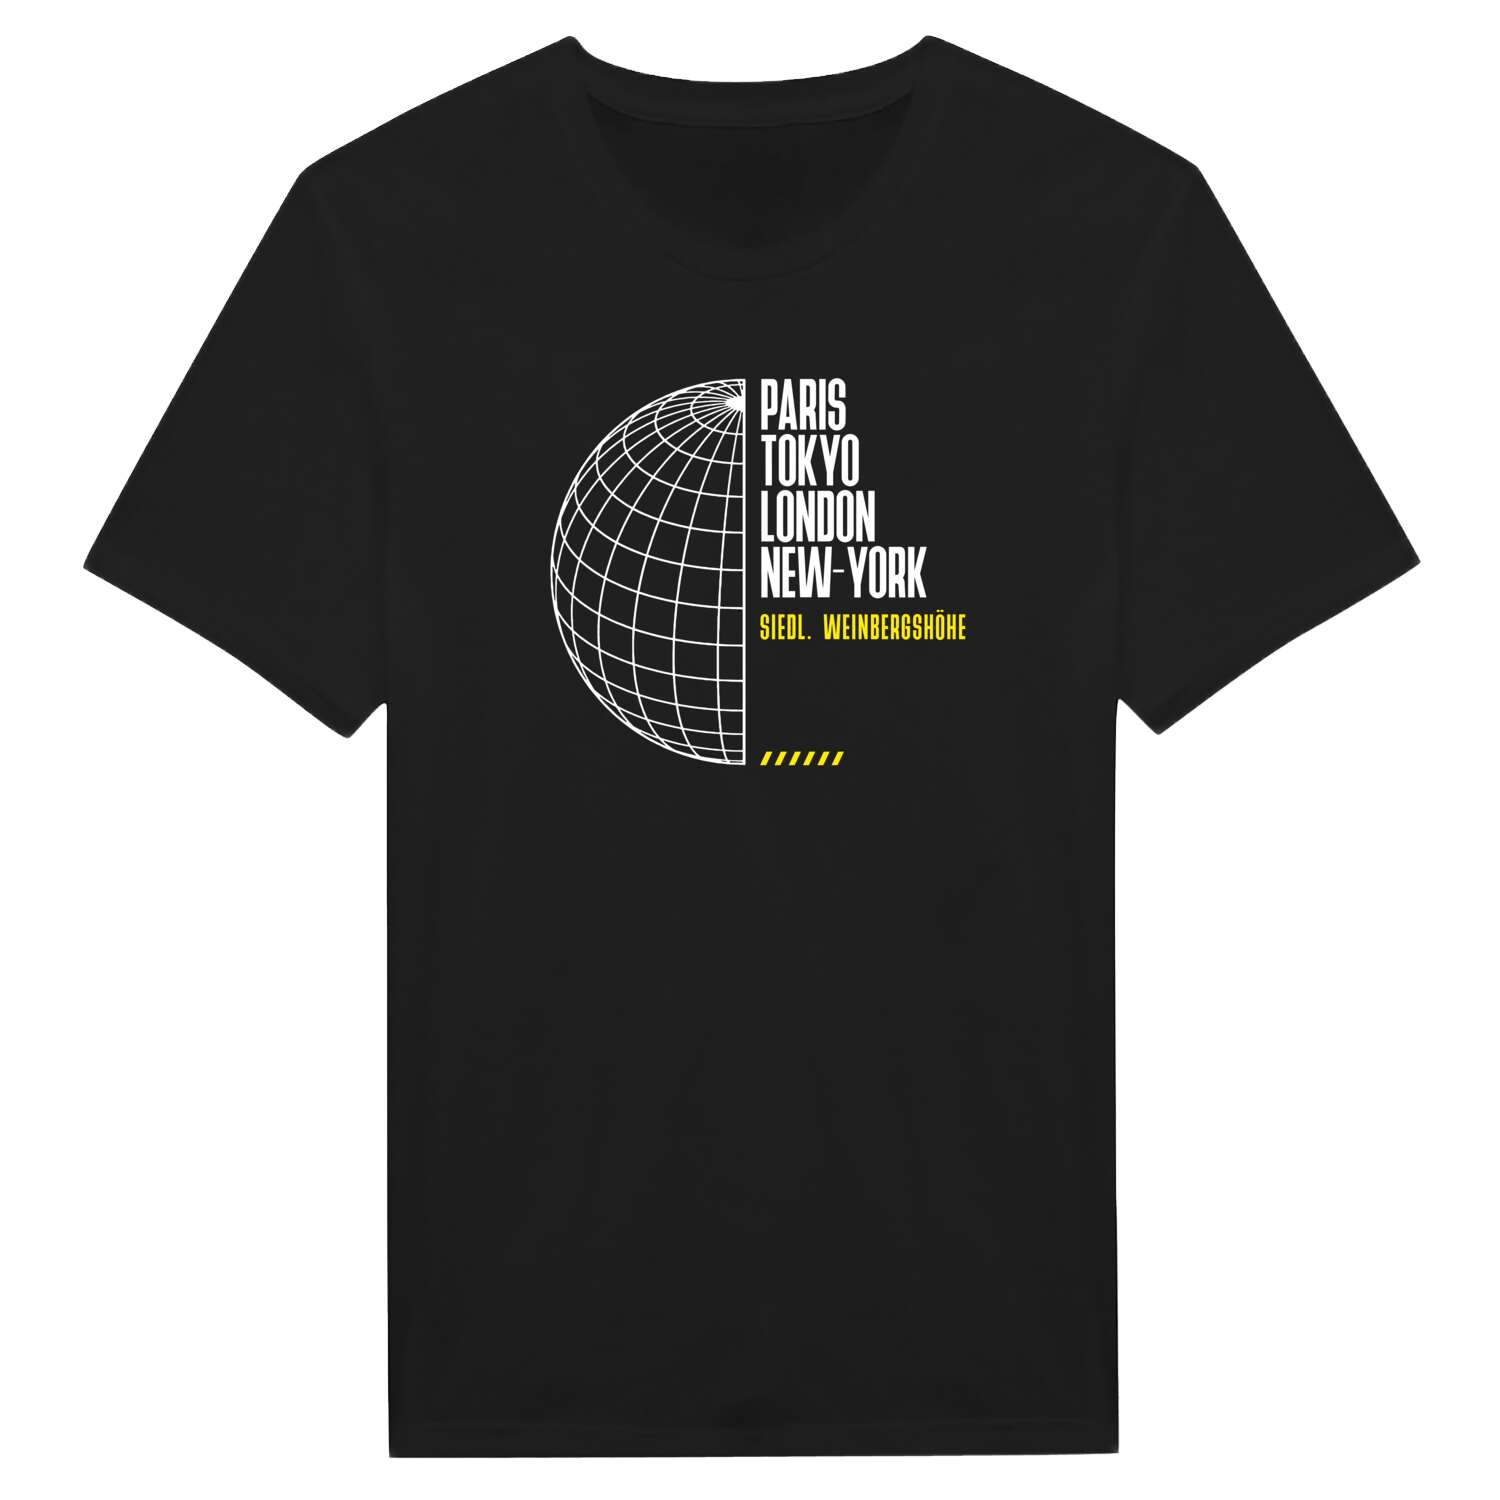 Siedl. Weinbergshöhe T-Shirt »Paris Tokyo London«